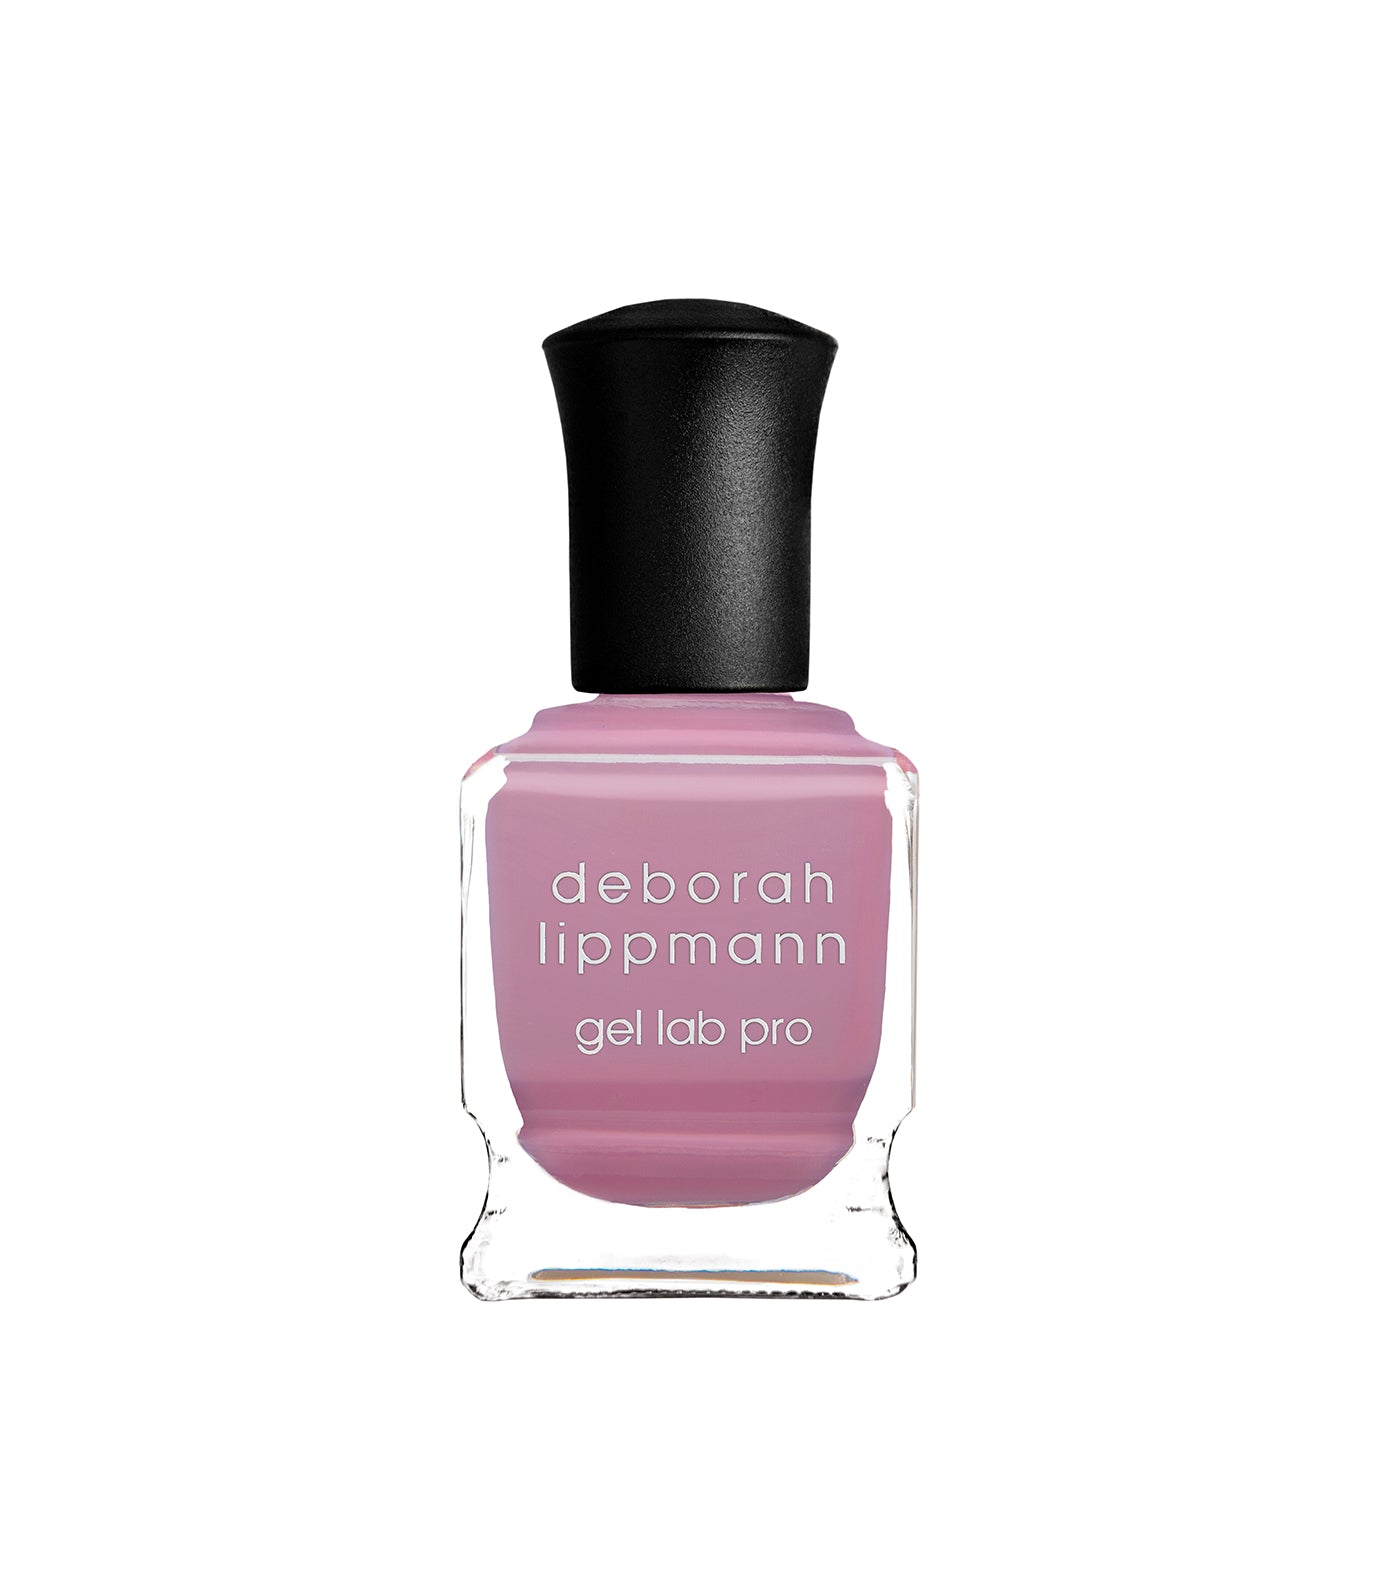 deborah lippmann gel lab pro nail polish - summer collection bae